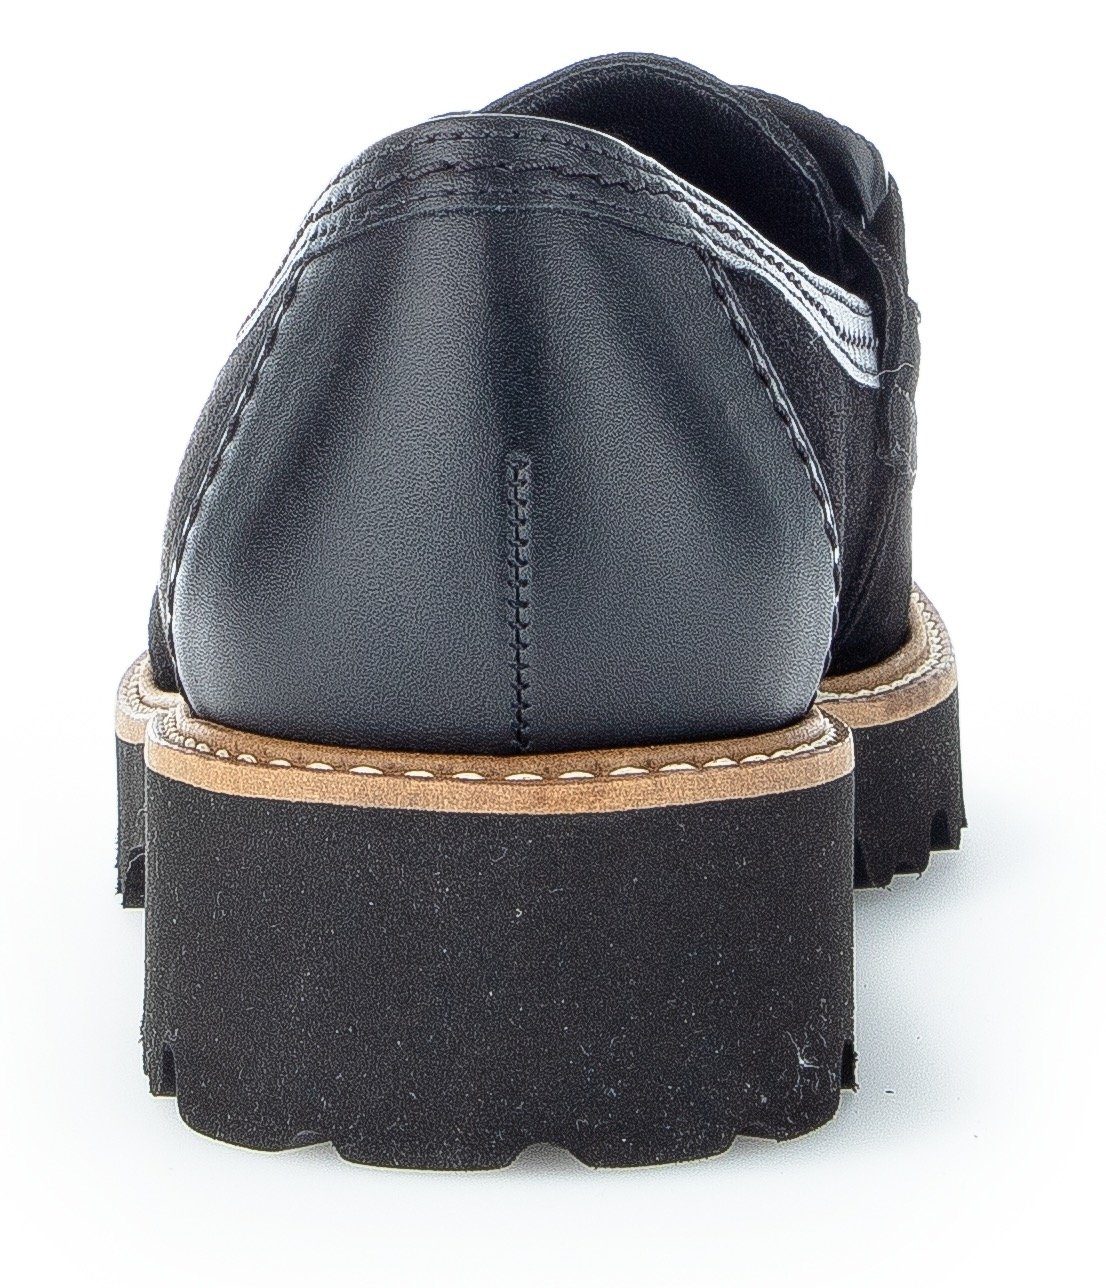 hochwertiger schwarz Gabor Leder-Innensohle mit Slipper